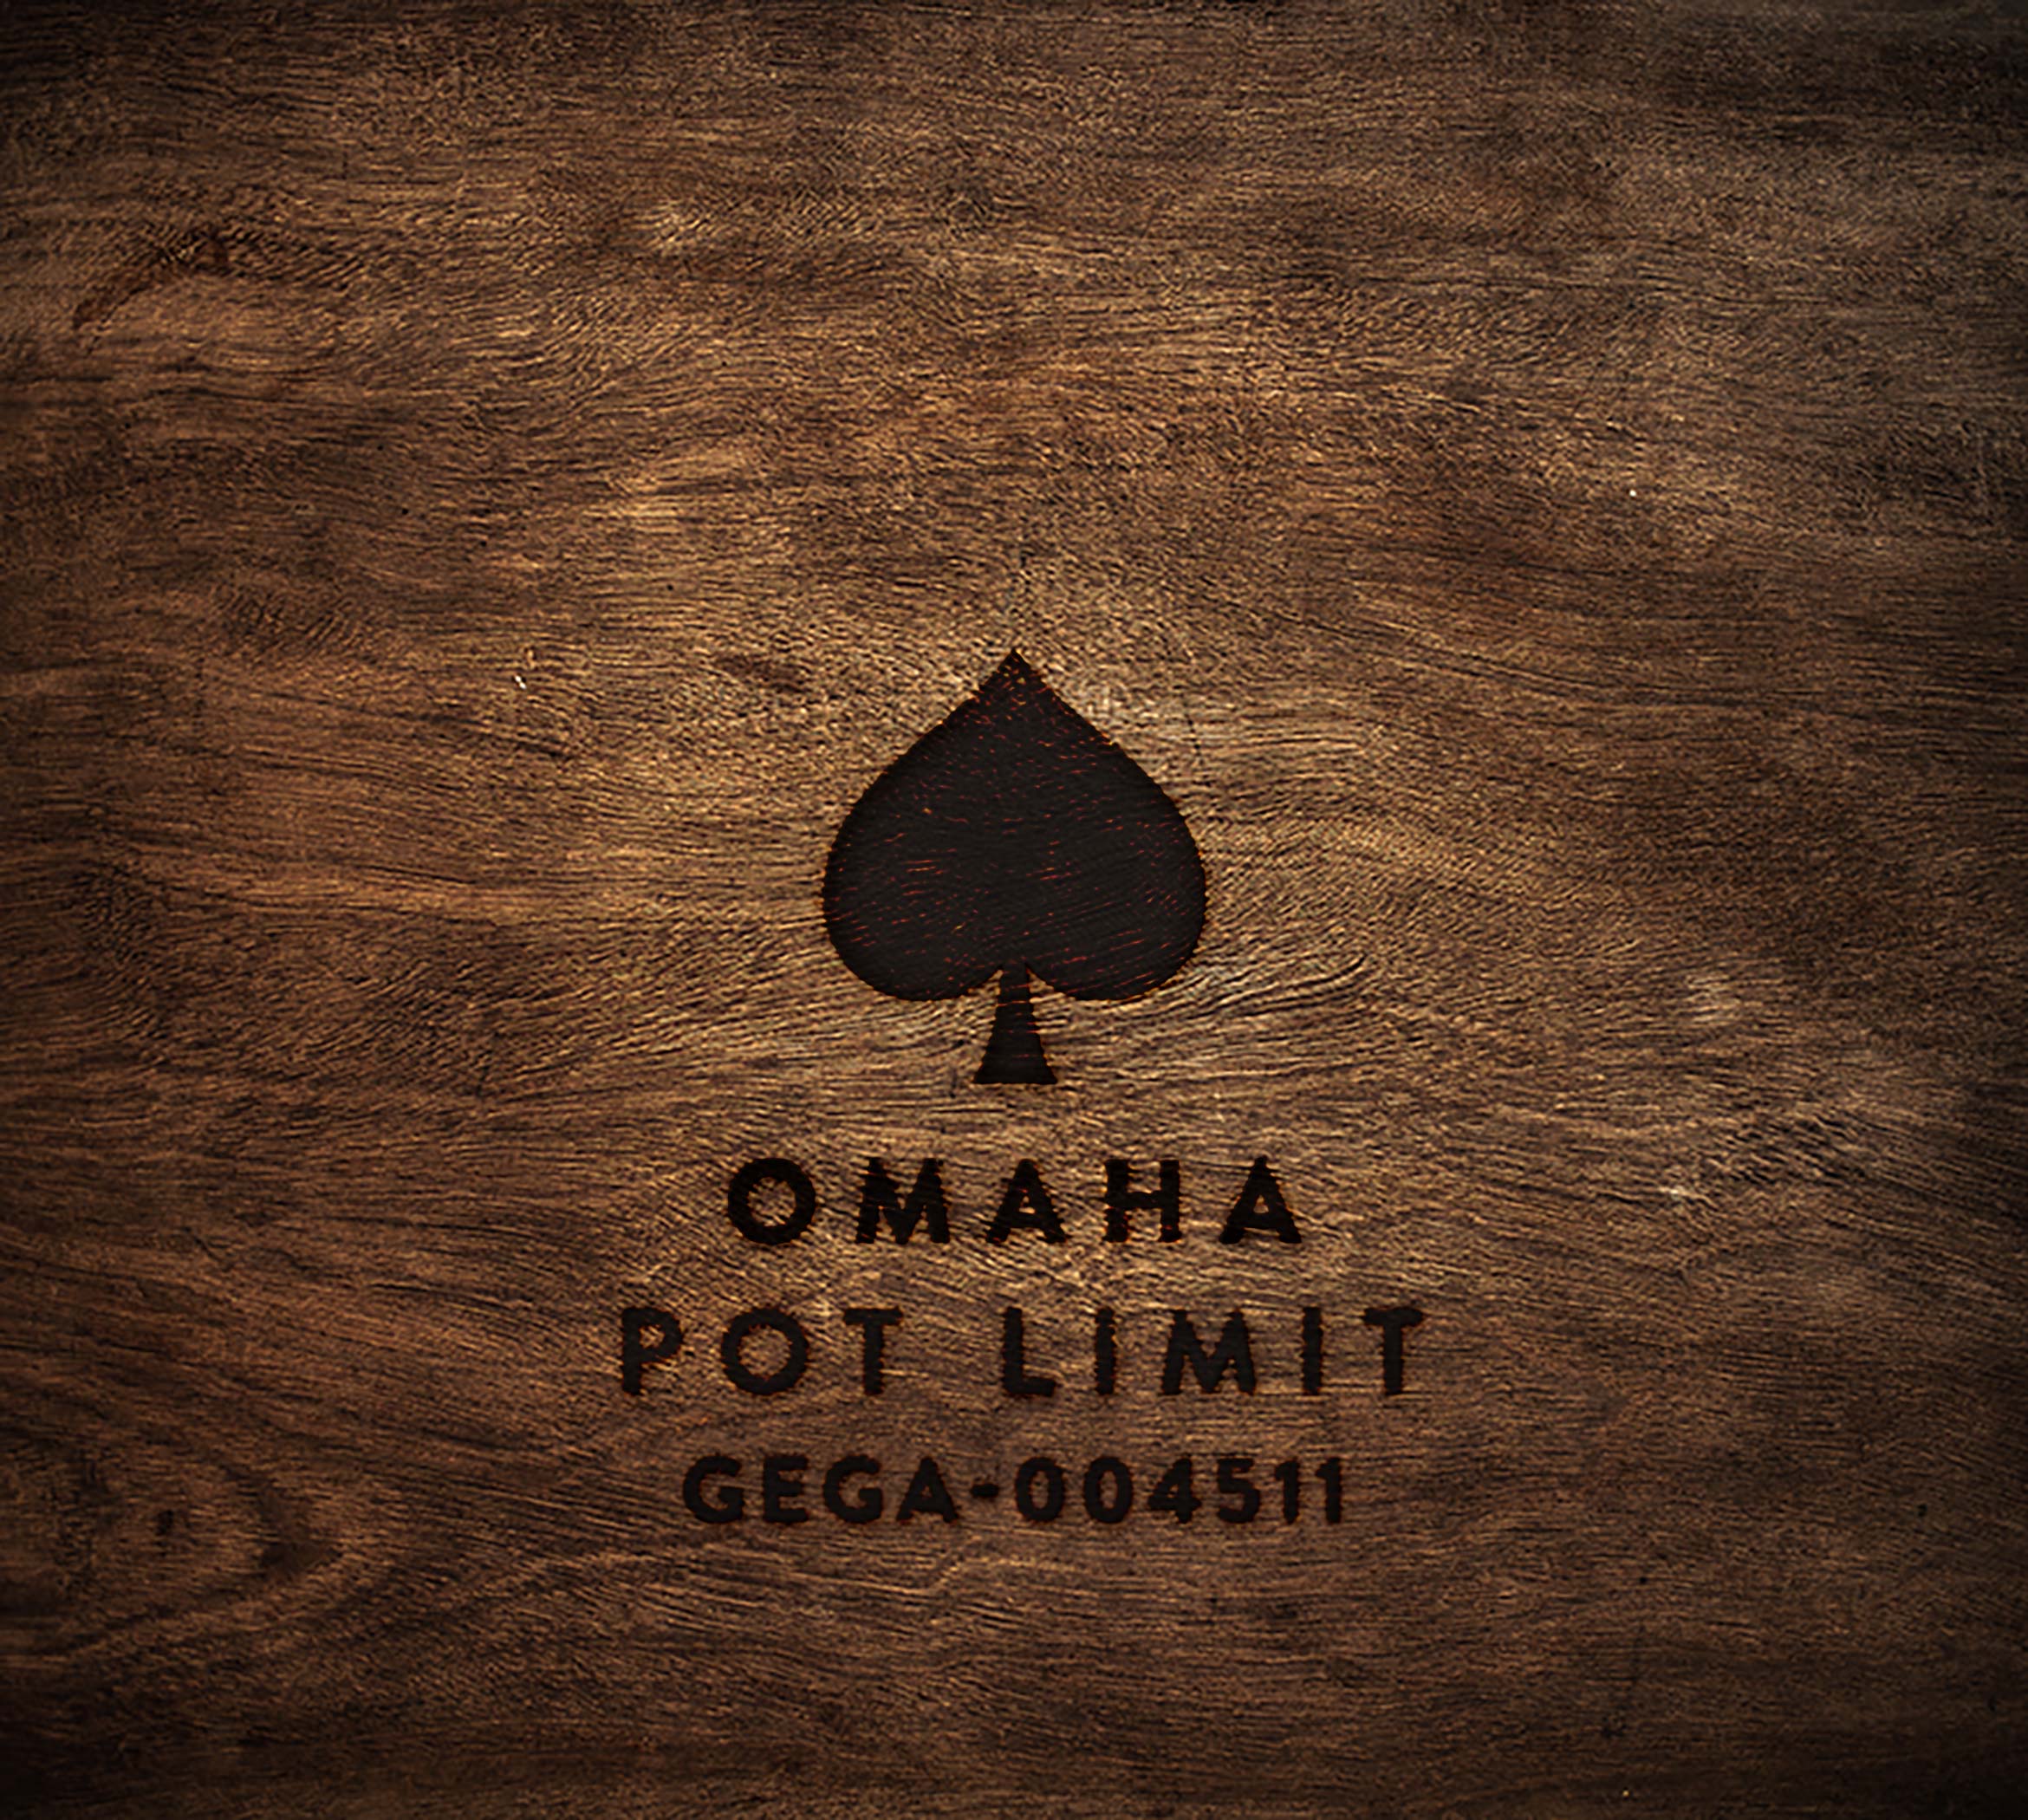 Omaha Pot Limit GEGA-004511 wood square